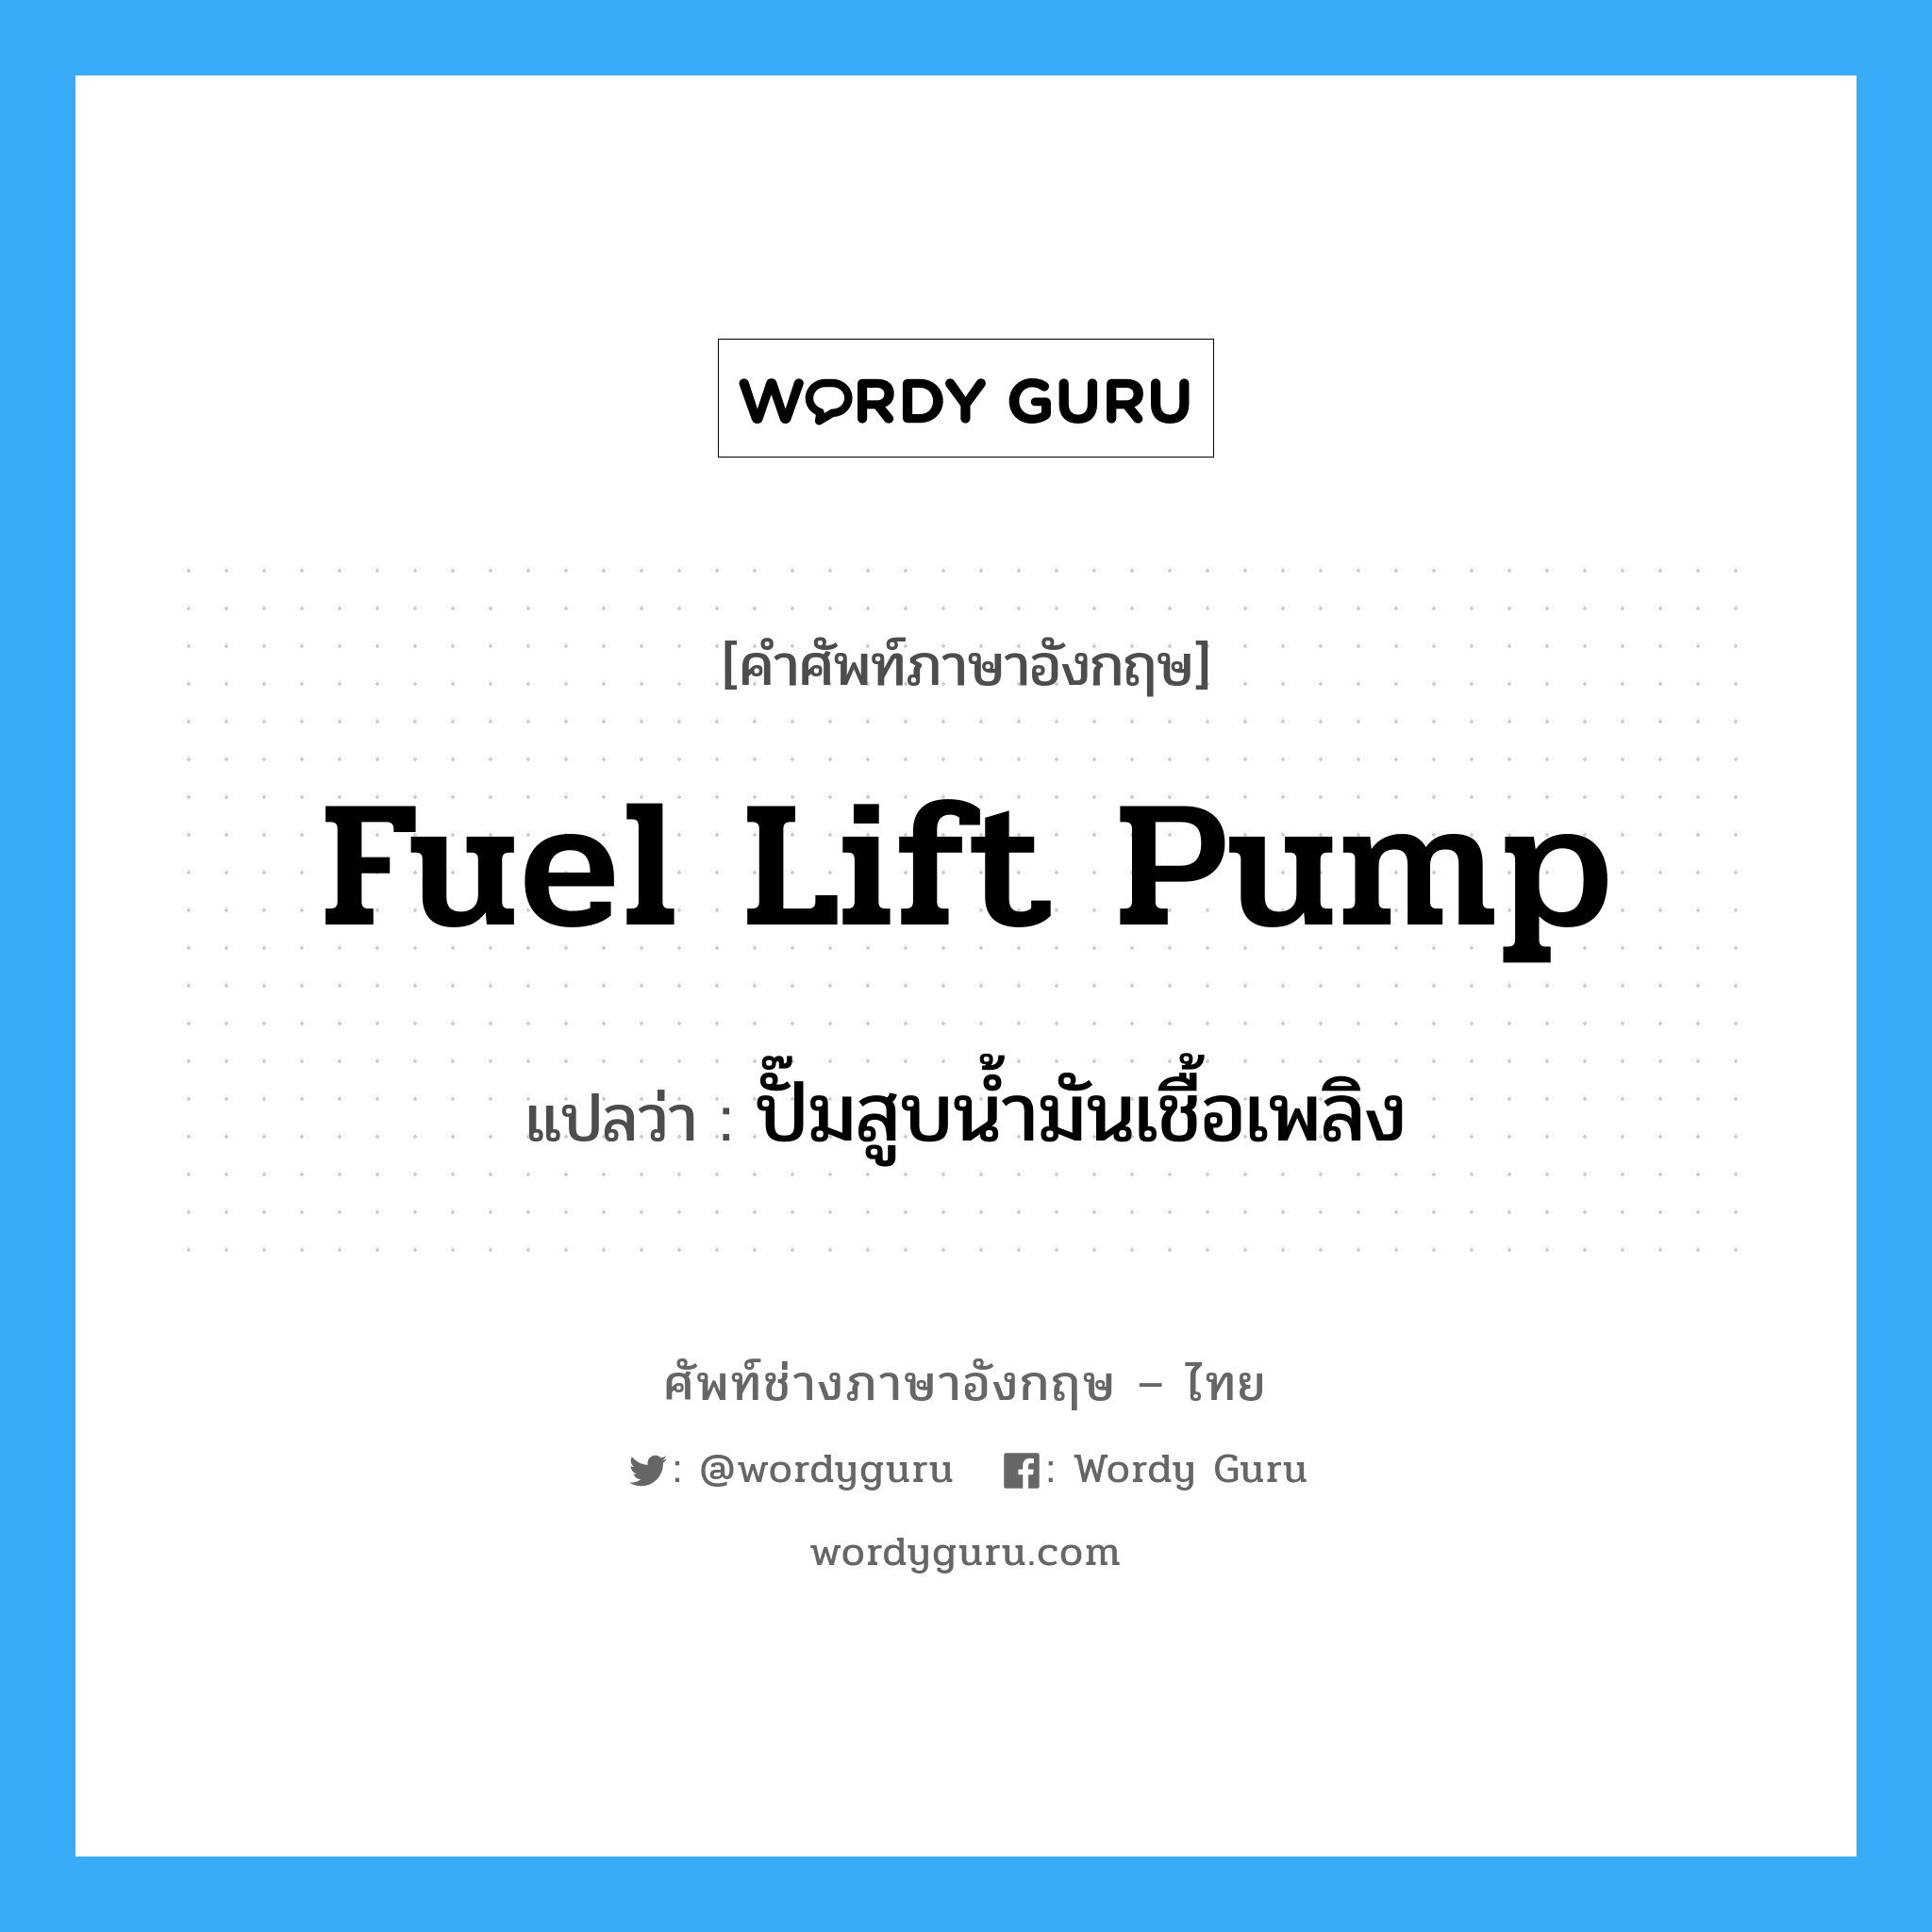 fuel lift pump แปลว่า?, คำศัพท์ช่างภาษาอังกฤษ - ไทย fuel lift pump คำศัพท์ภาษาอังกฤษ fuel lift pump แปลว่า ปั๊มสูบน้ำมันเชื้อเพลิง